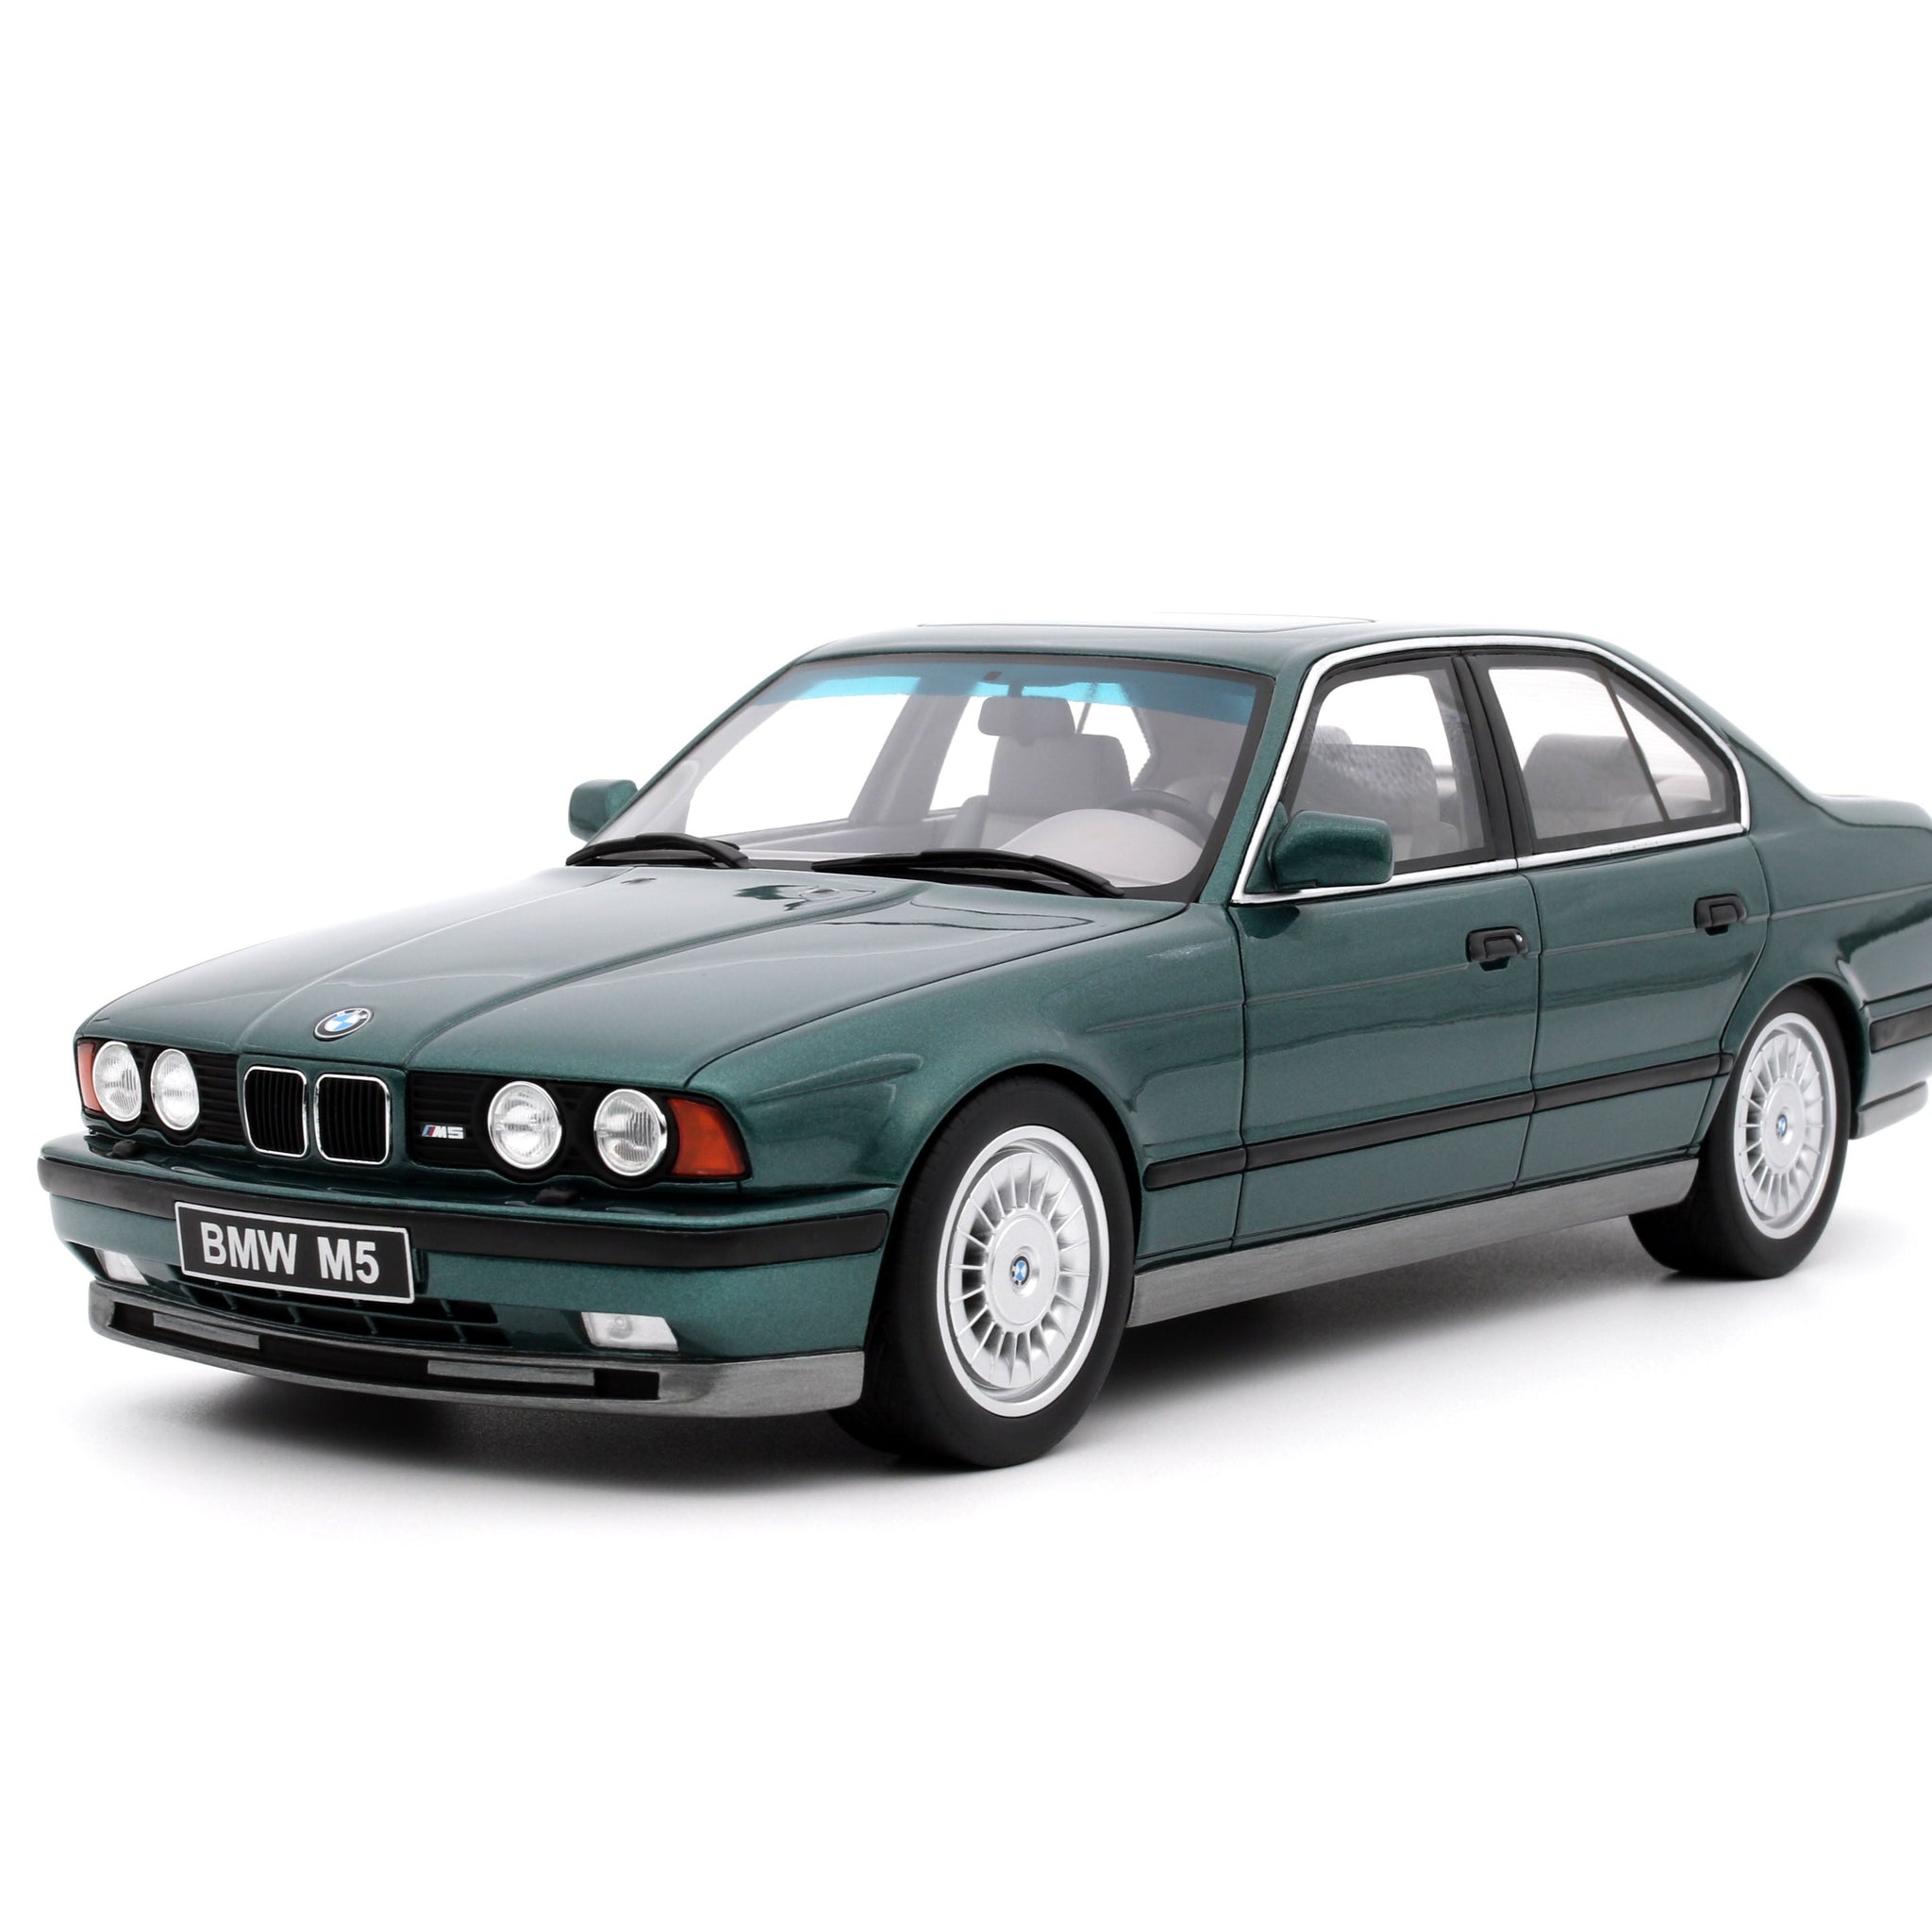 BMW E34 M5 Phase I Cecotto Green 1991